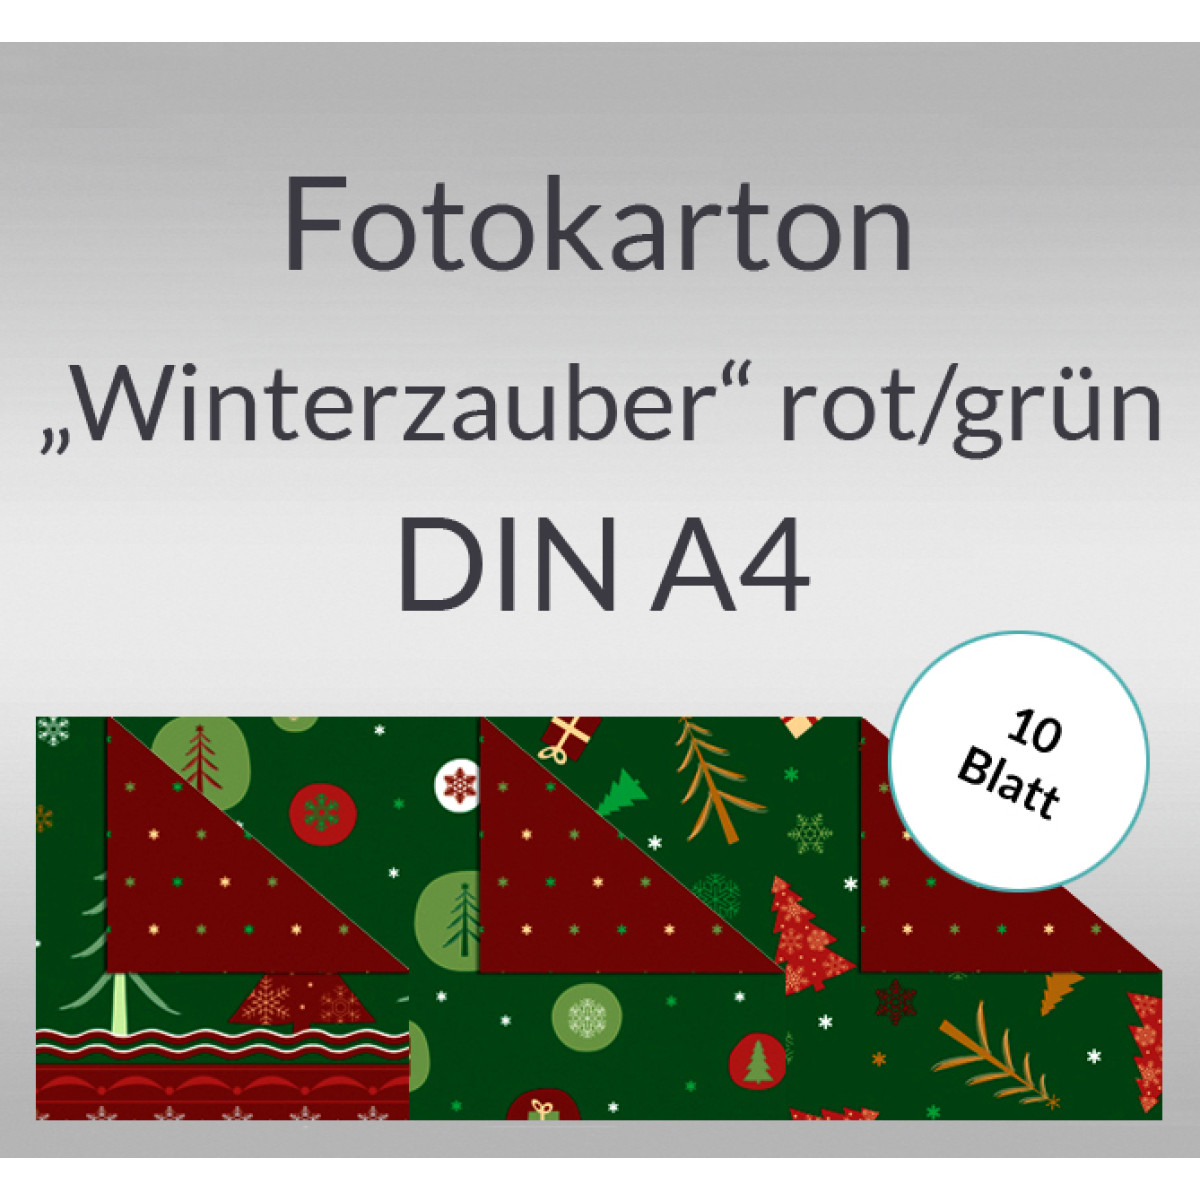 Fotokarton "Winterzauber" rot/grün DIN A4 - 10 Blatt